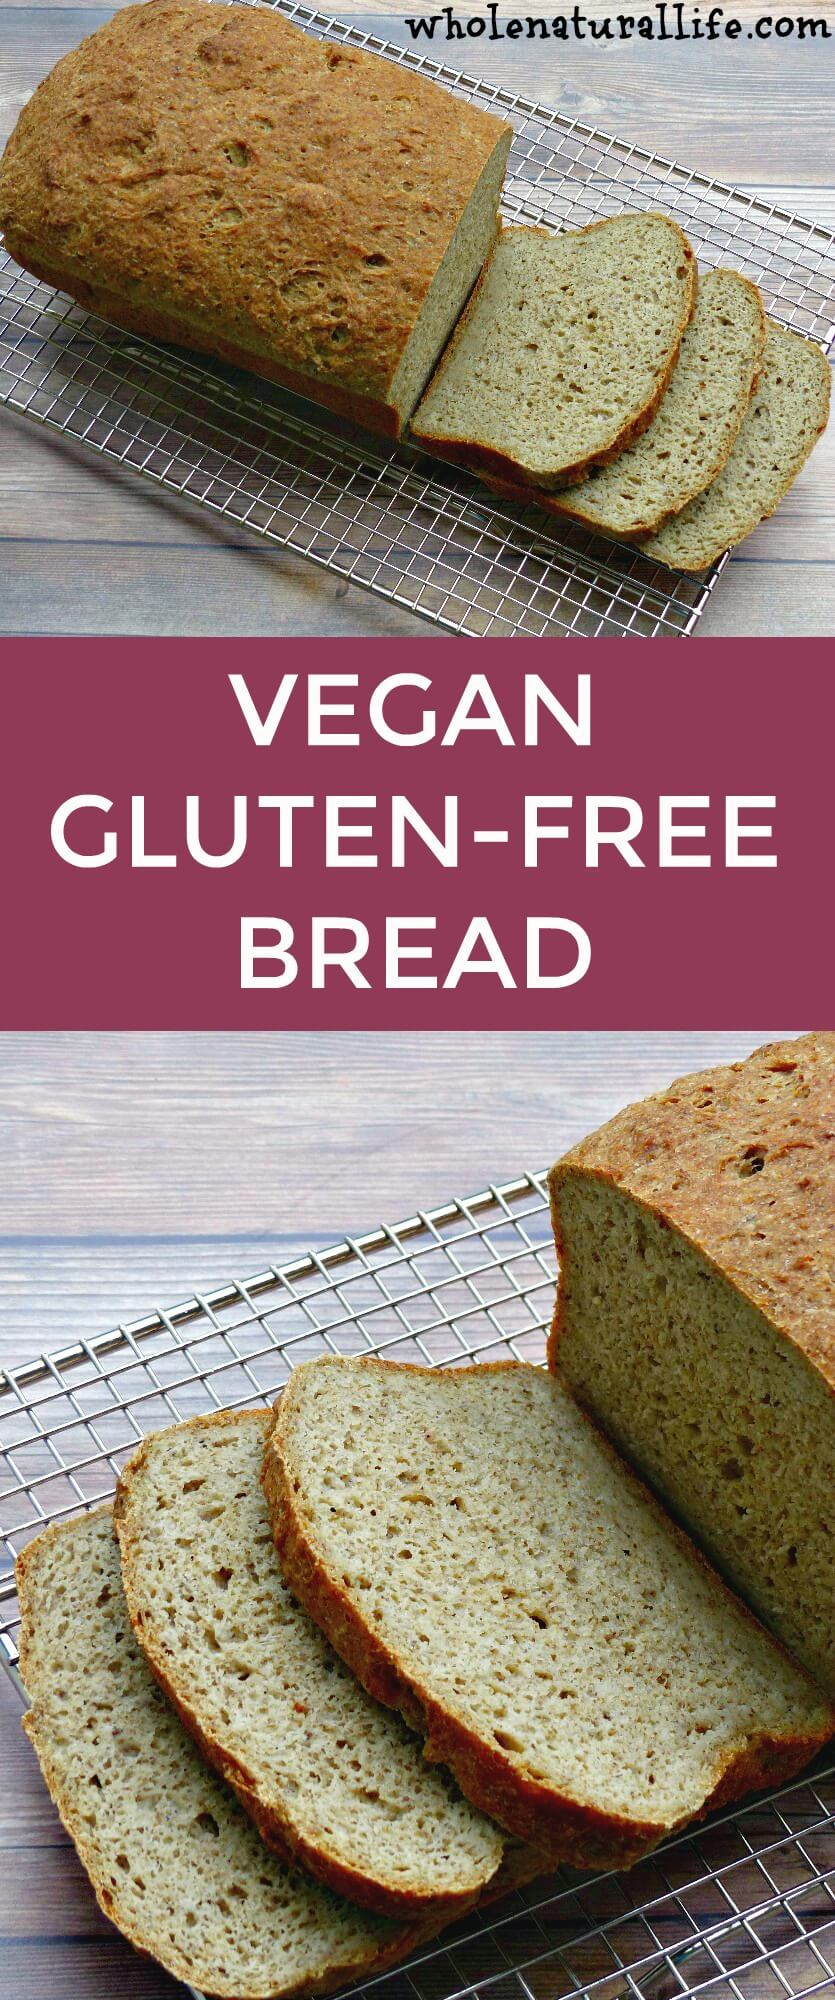 Gluten Free Dairy Free Bread Recipe
 Vegan Gluten free Bread Whole Natural Life